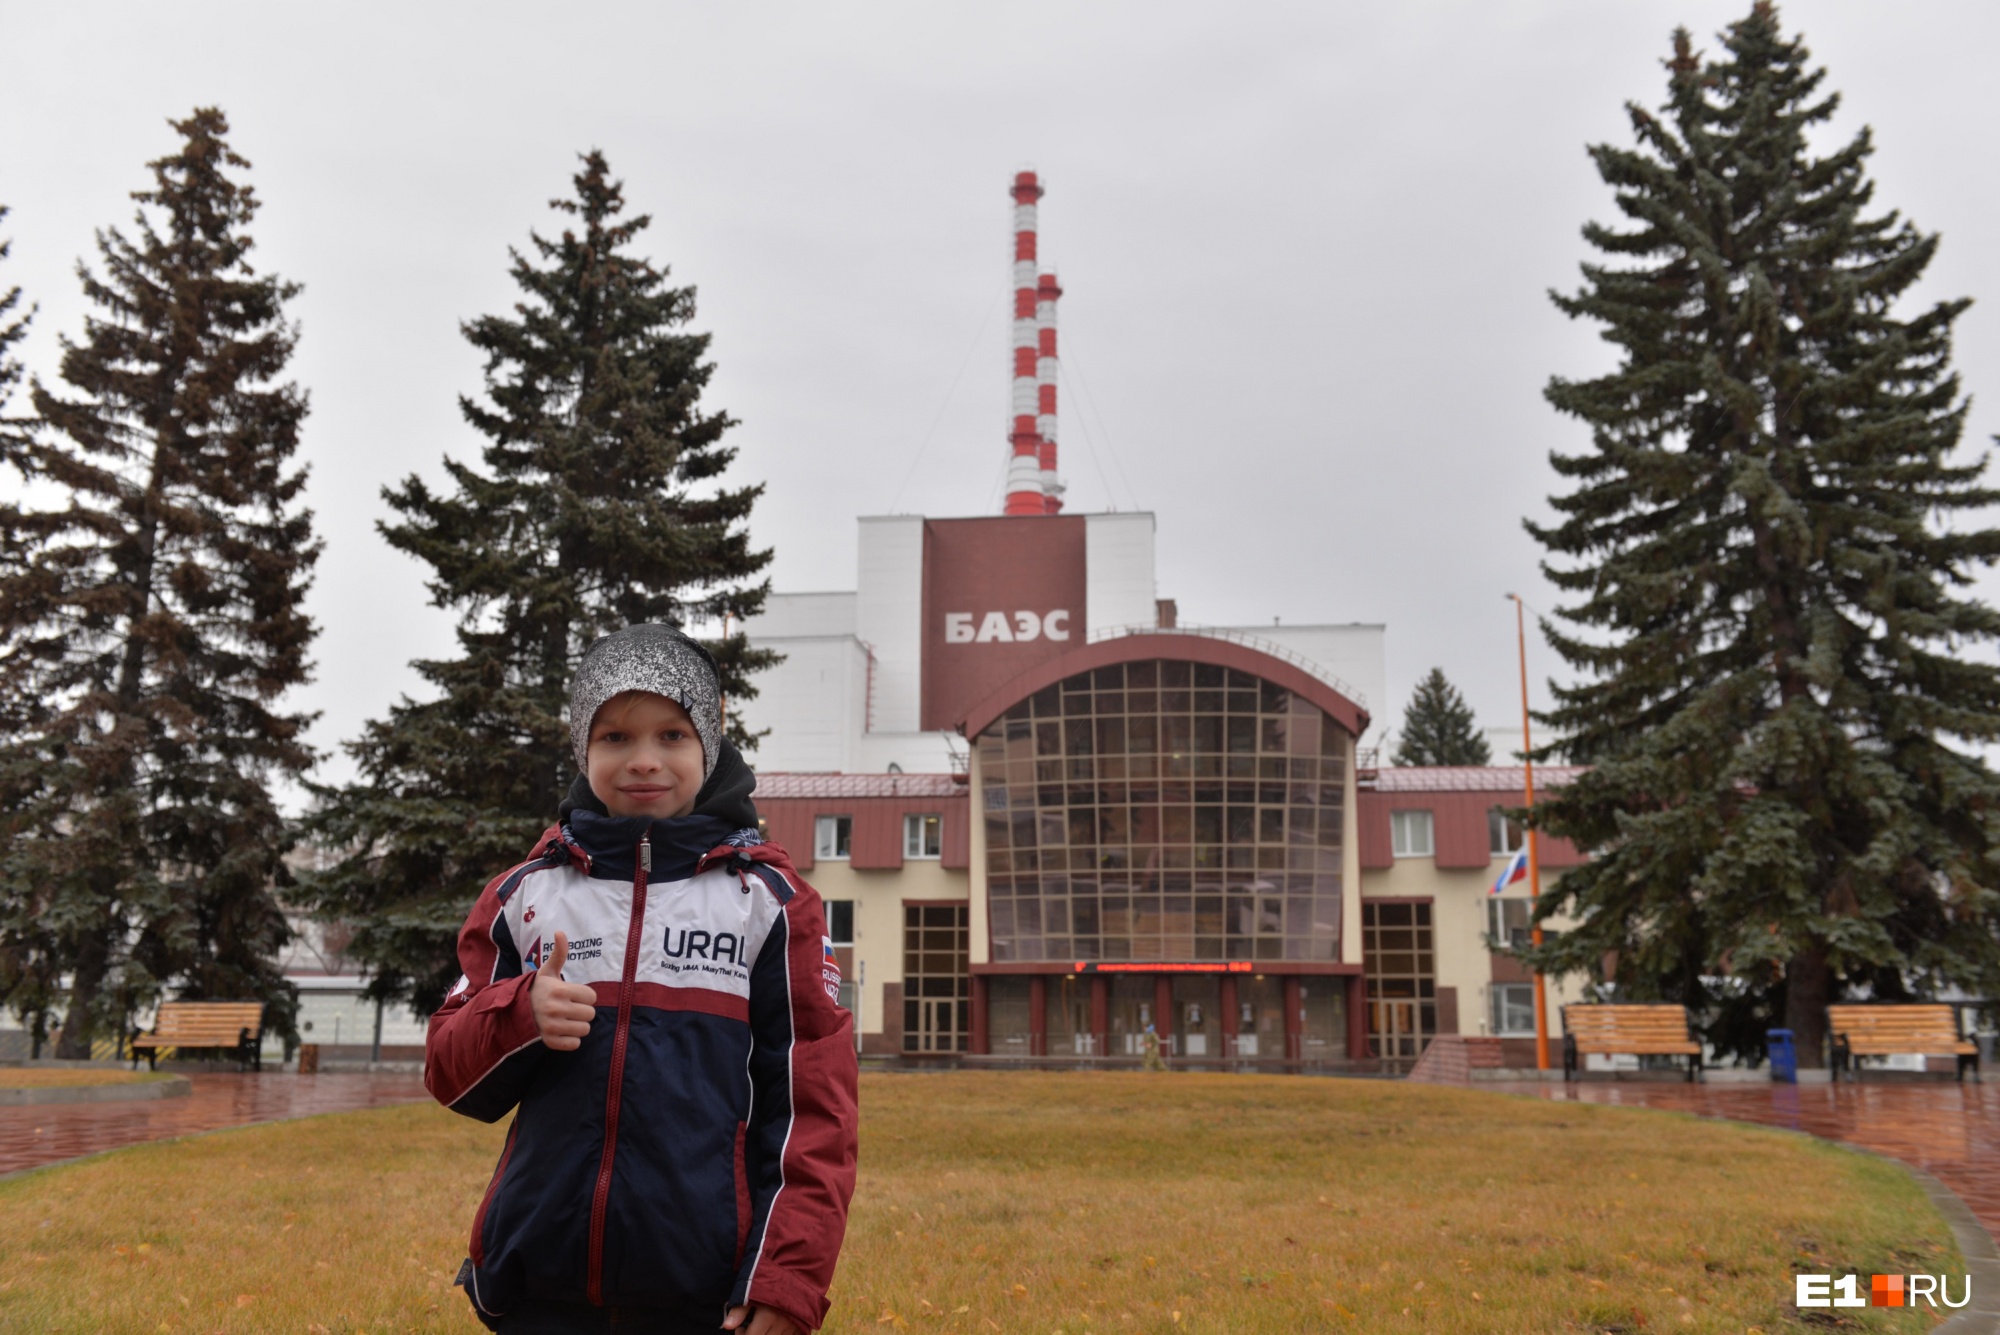 Сбылась мечта: вундеркинд из Екатеринбурга, который знает атомную физику, побывал на АЭС